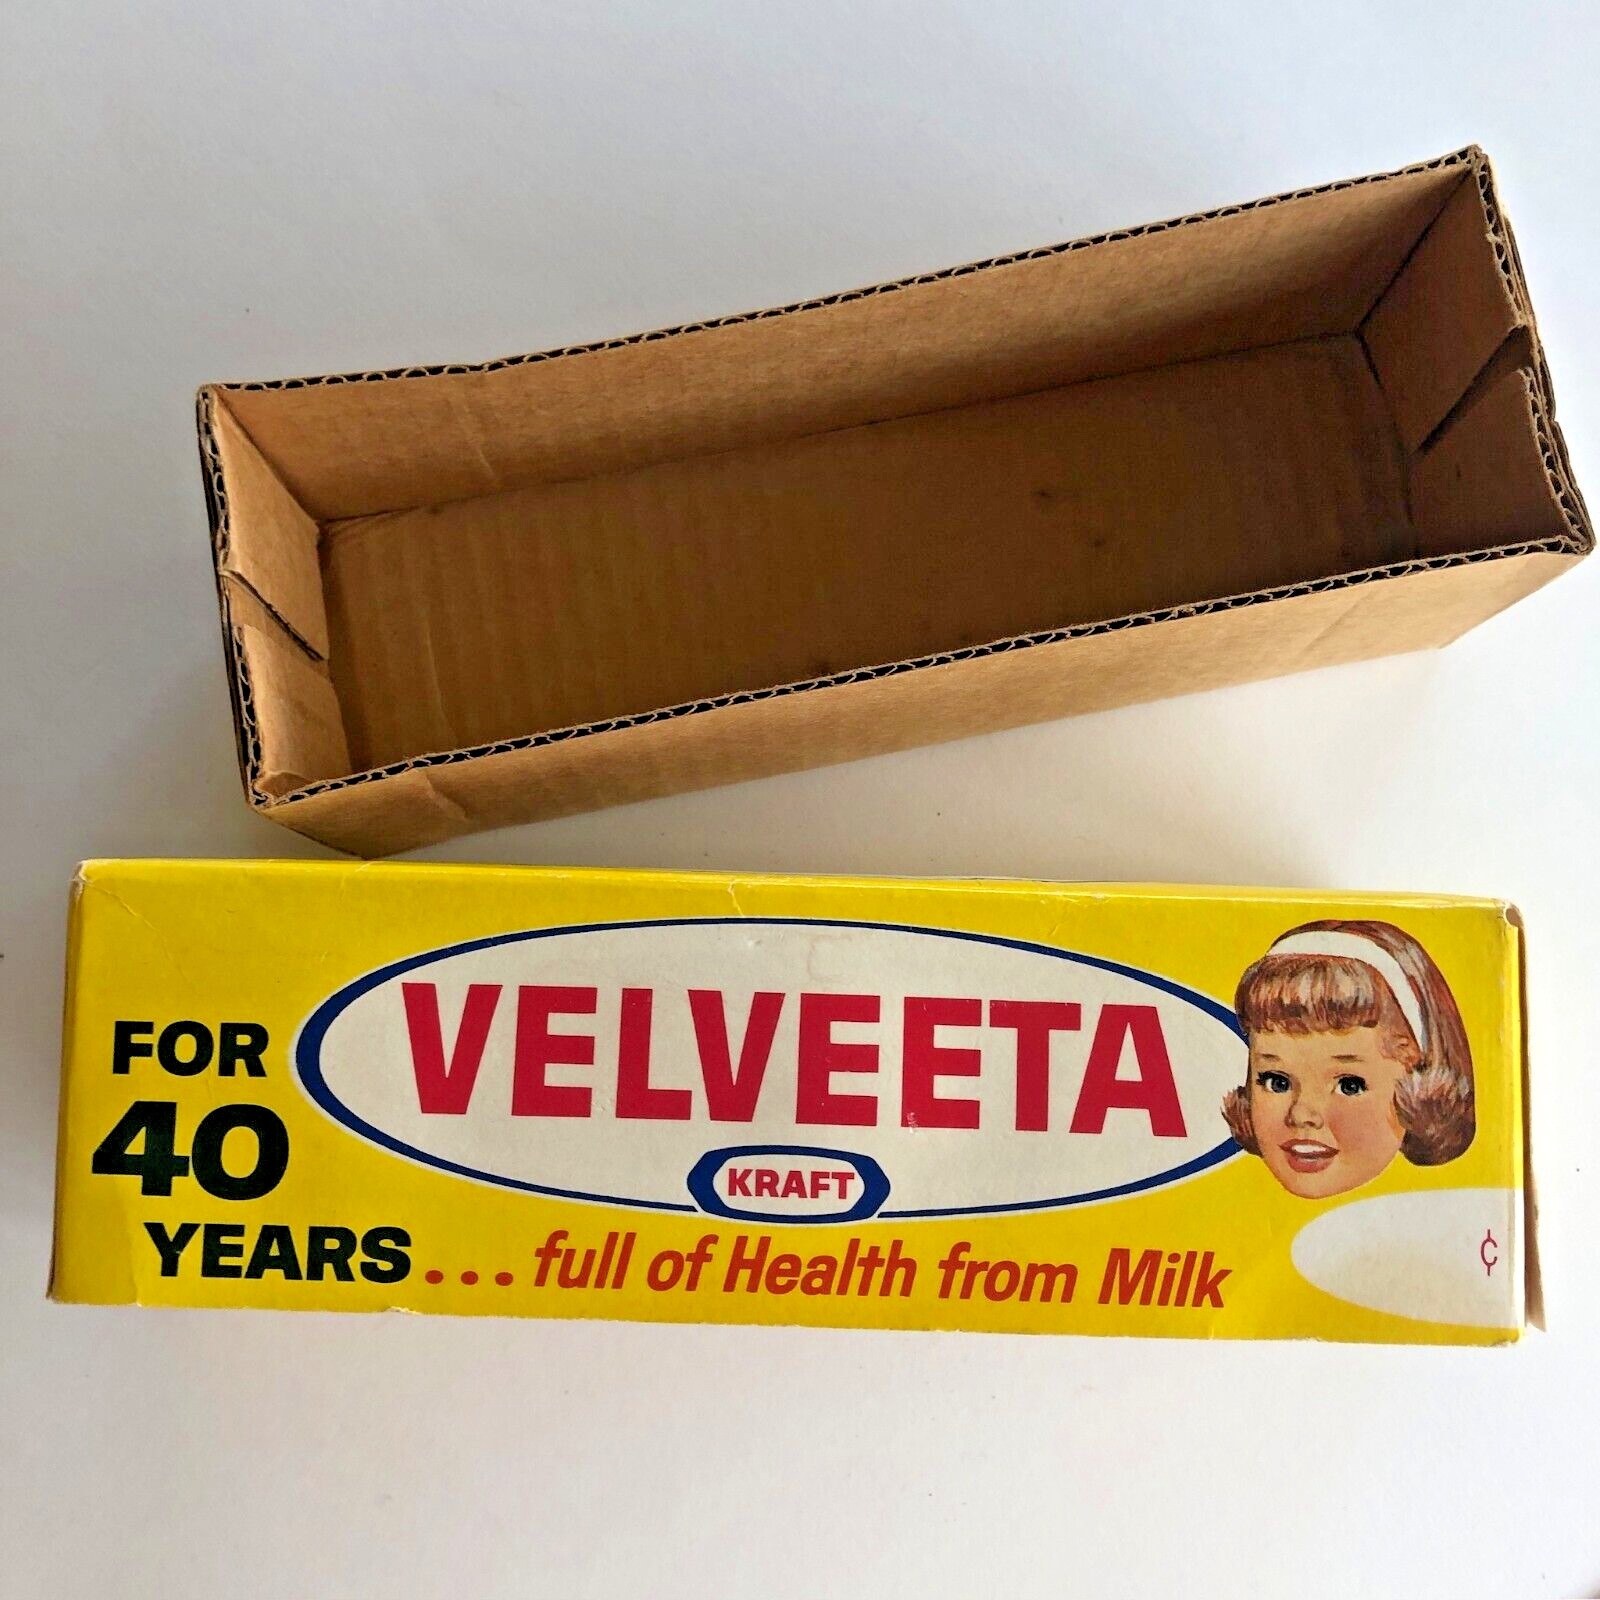 Vintage Velveeta Cheese For 40 Years Original Box Empty -See Pics for Condition